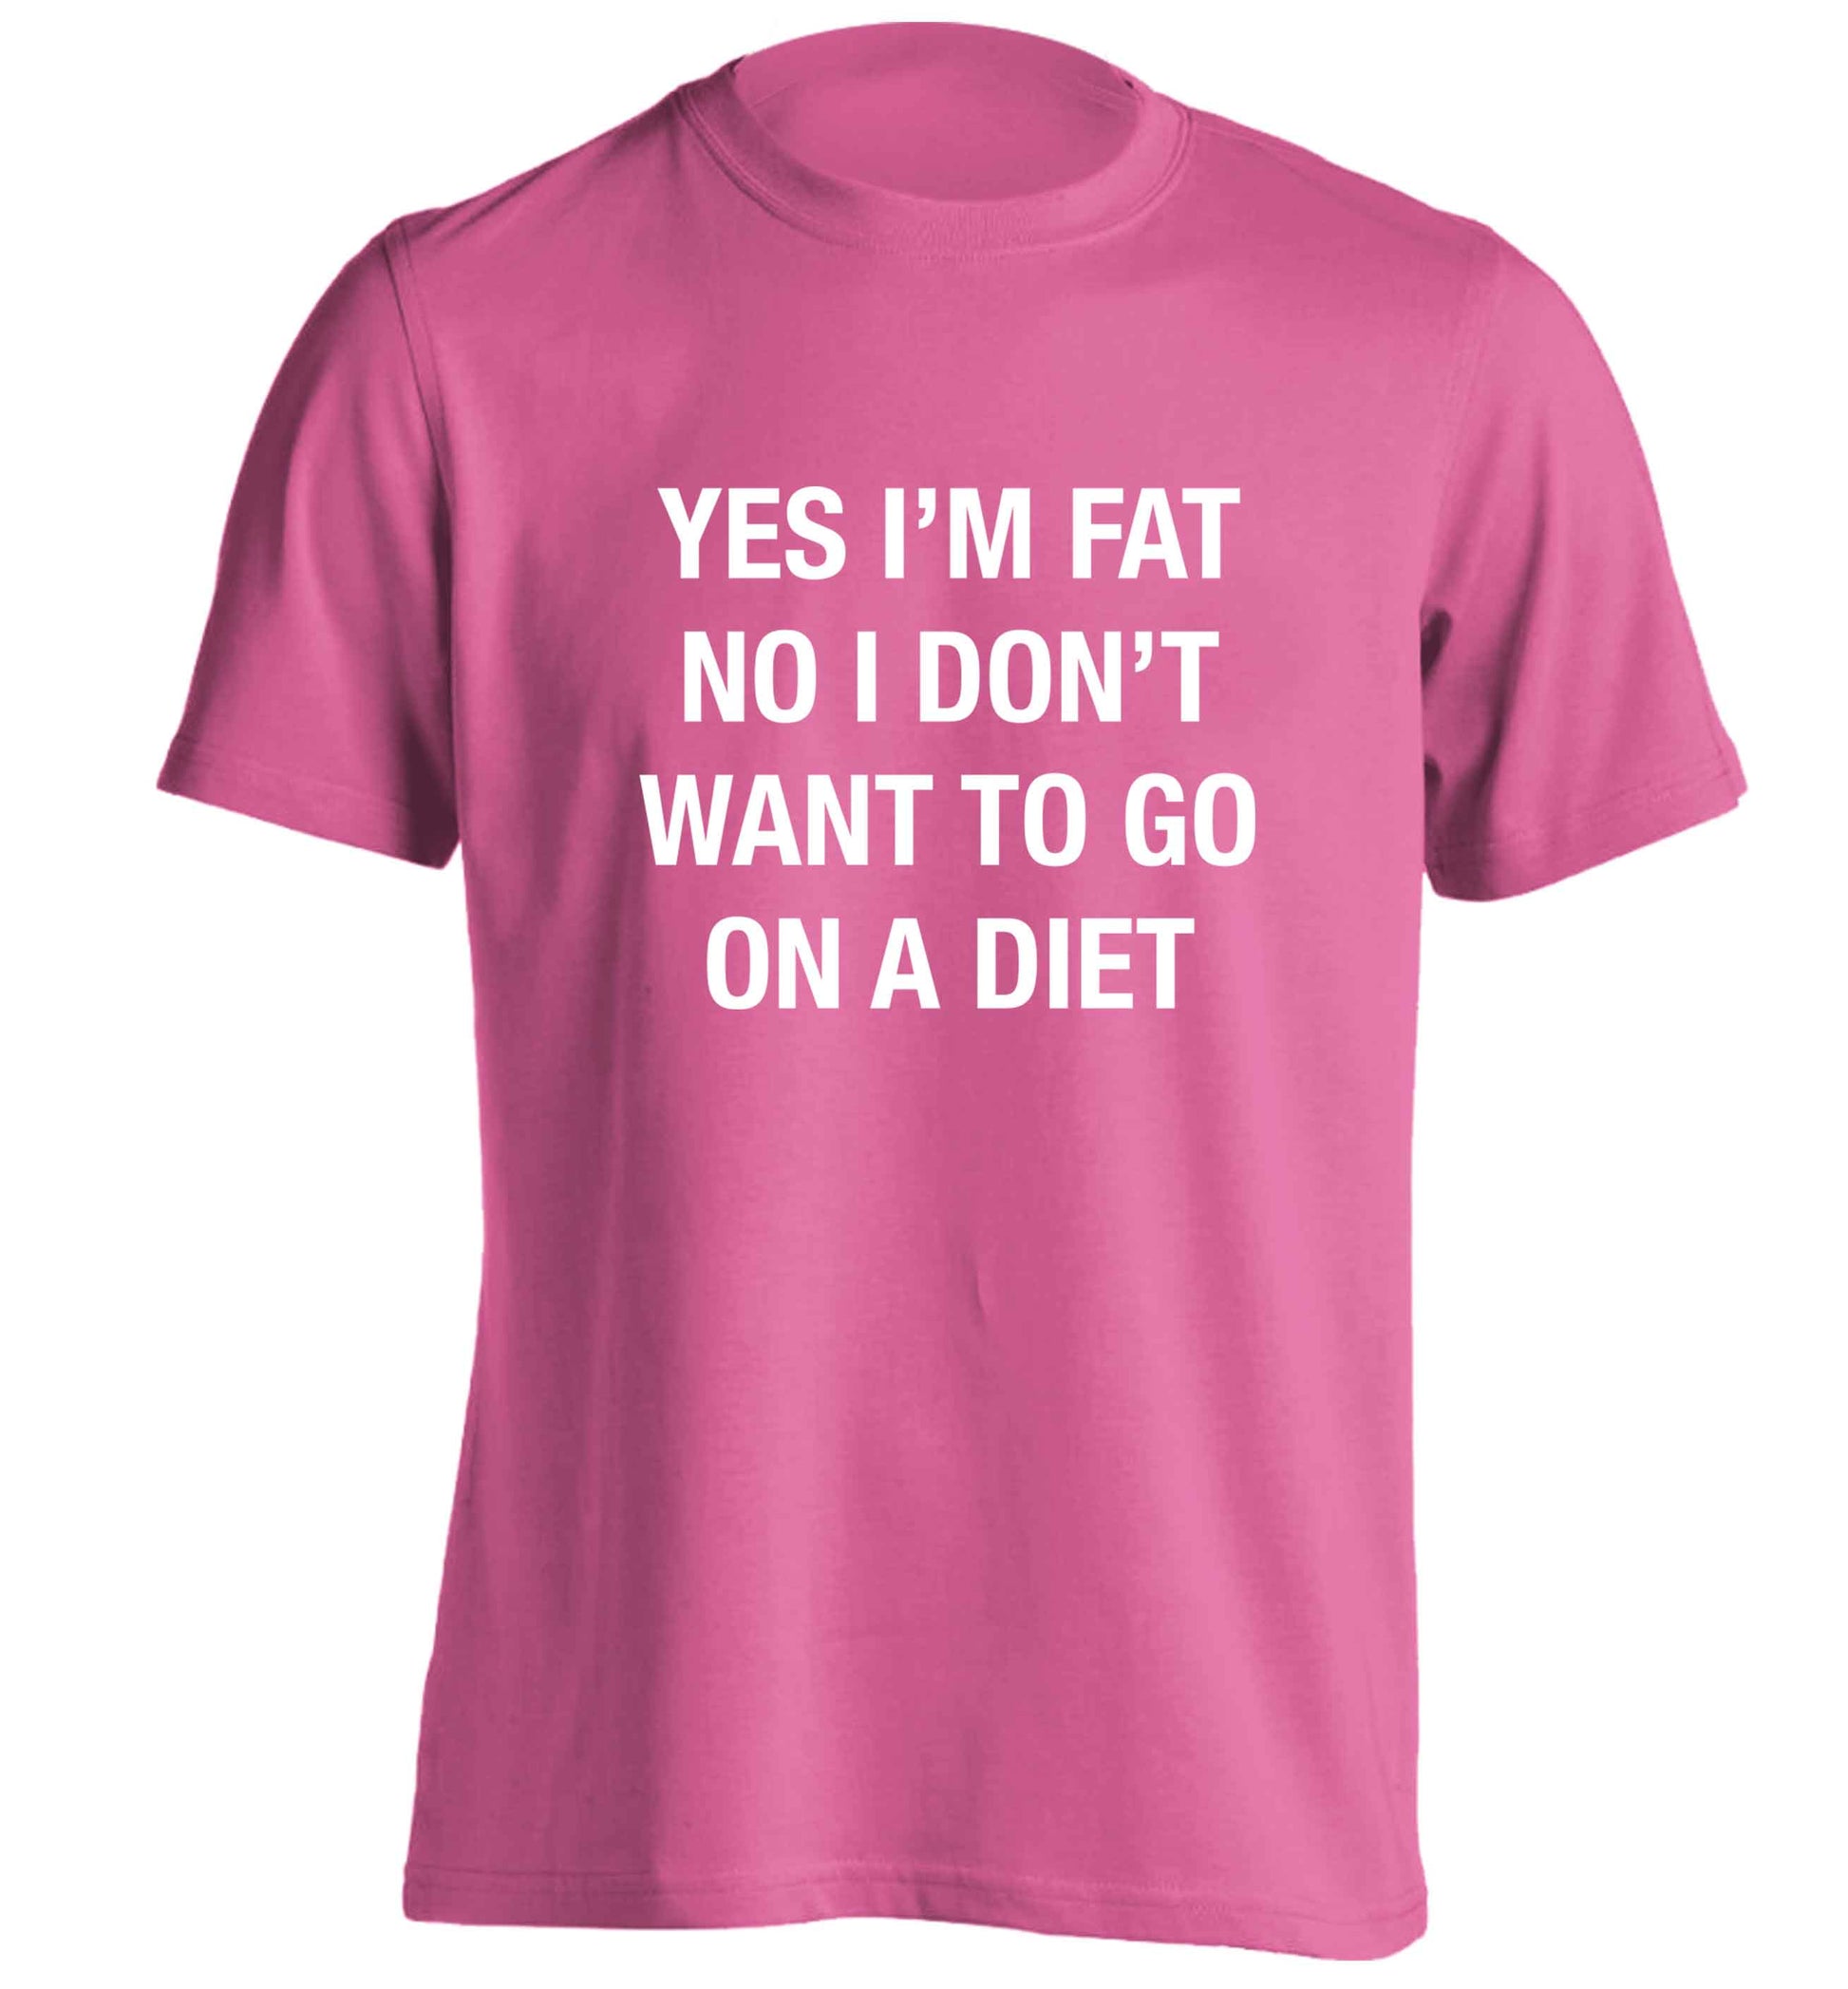 Yes I'm fat, no I don't want to go on a diet adults unisex pink Tshirt 2XL